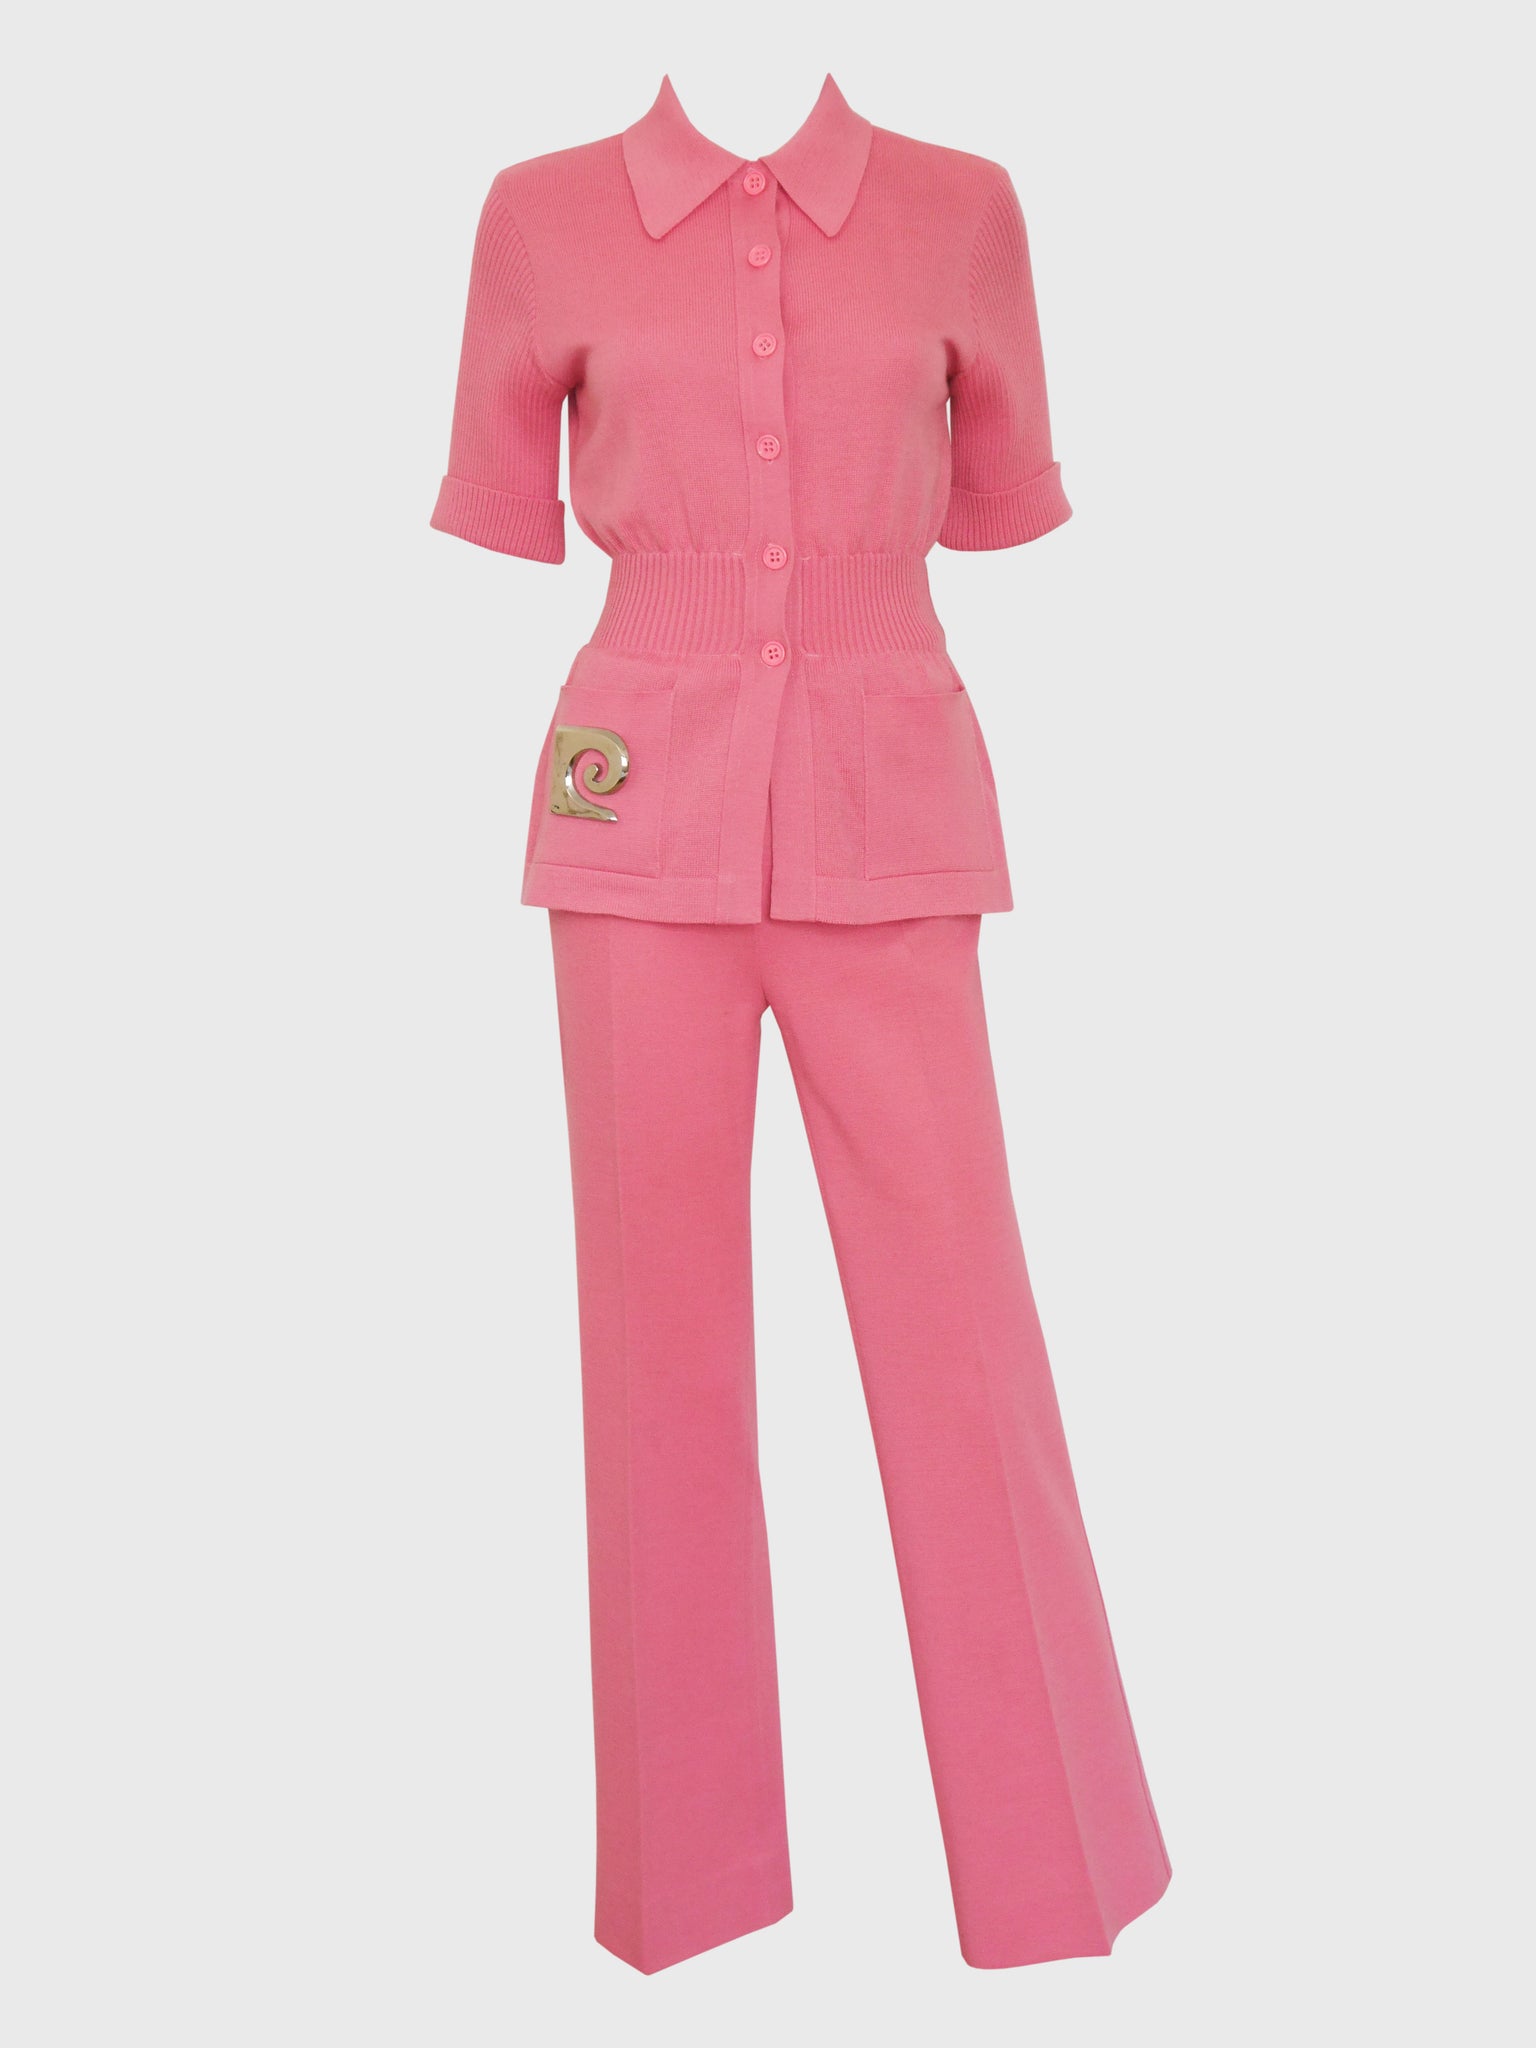 PIERRE CARDIN 1970s Vintage Pink Knit Jersey Suit Pants & Jacket